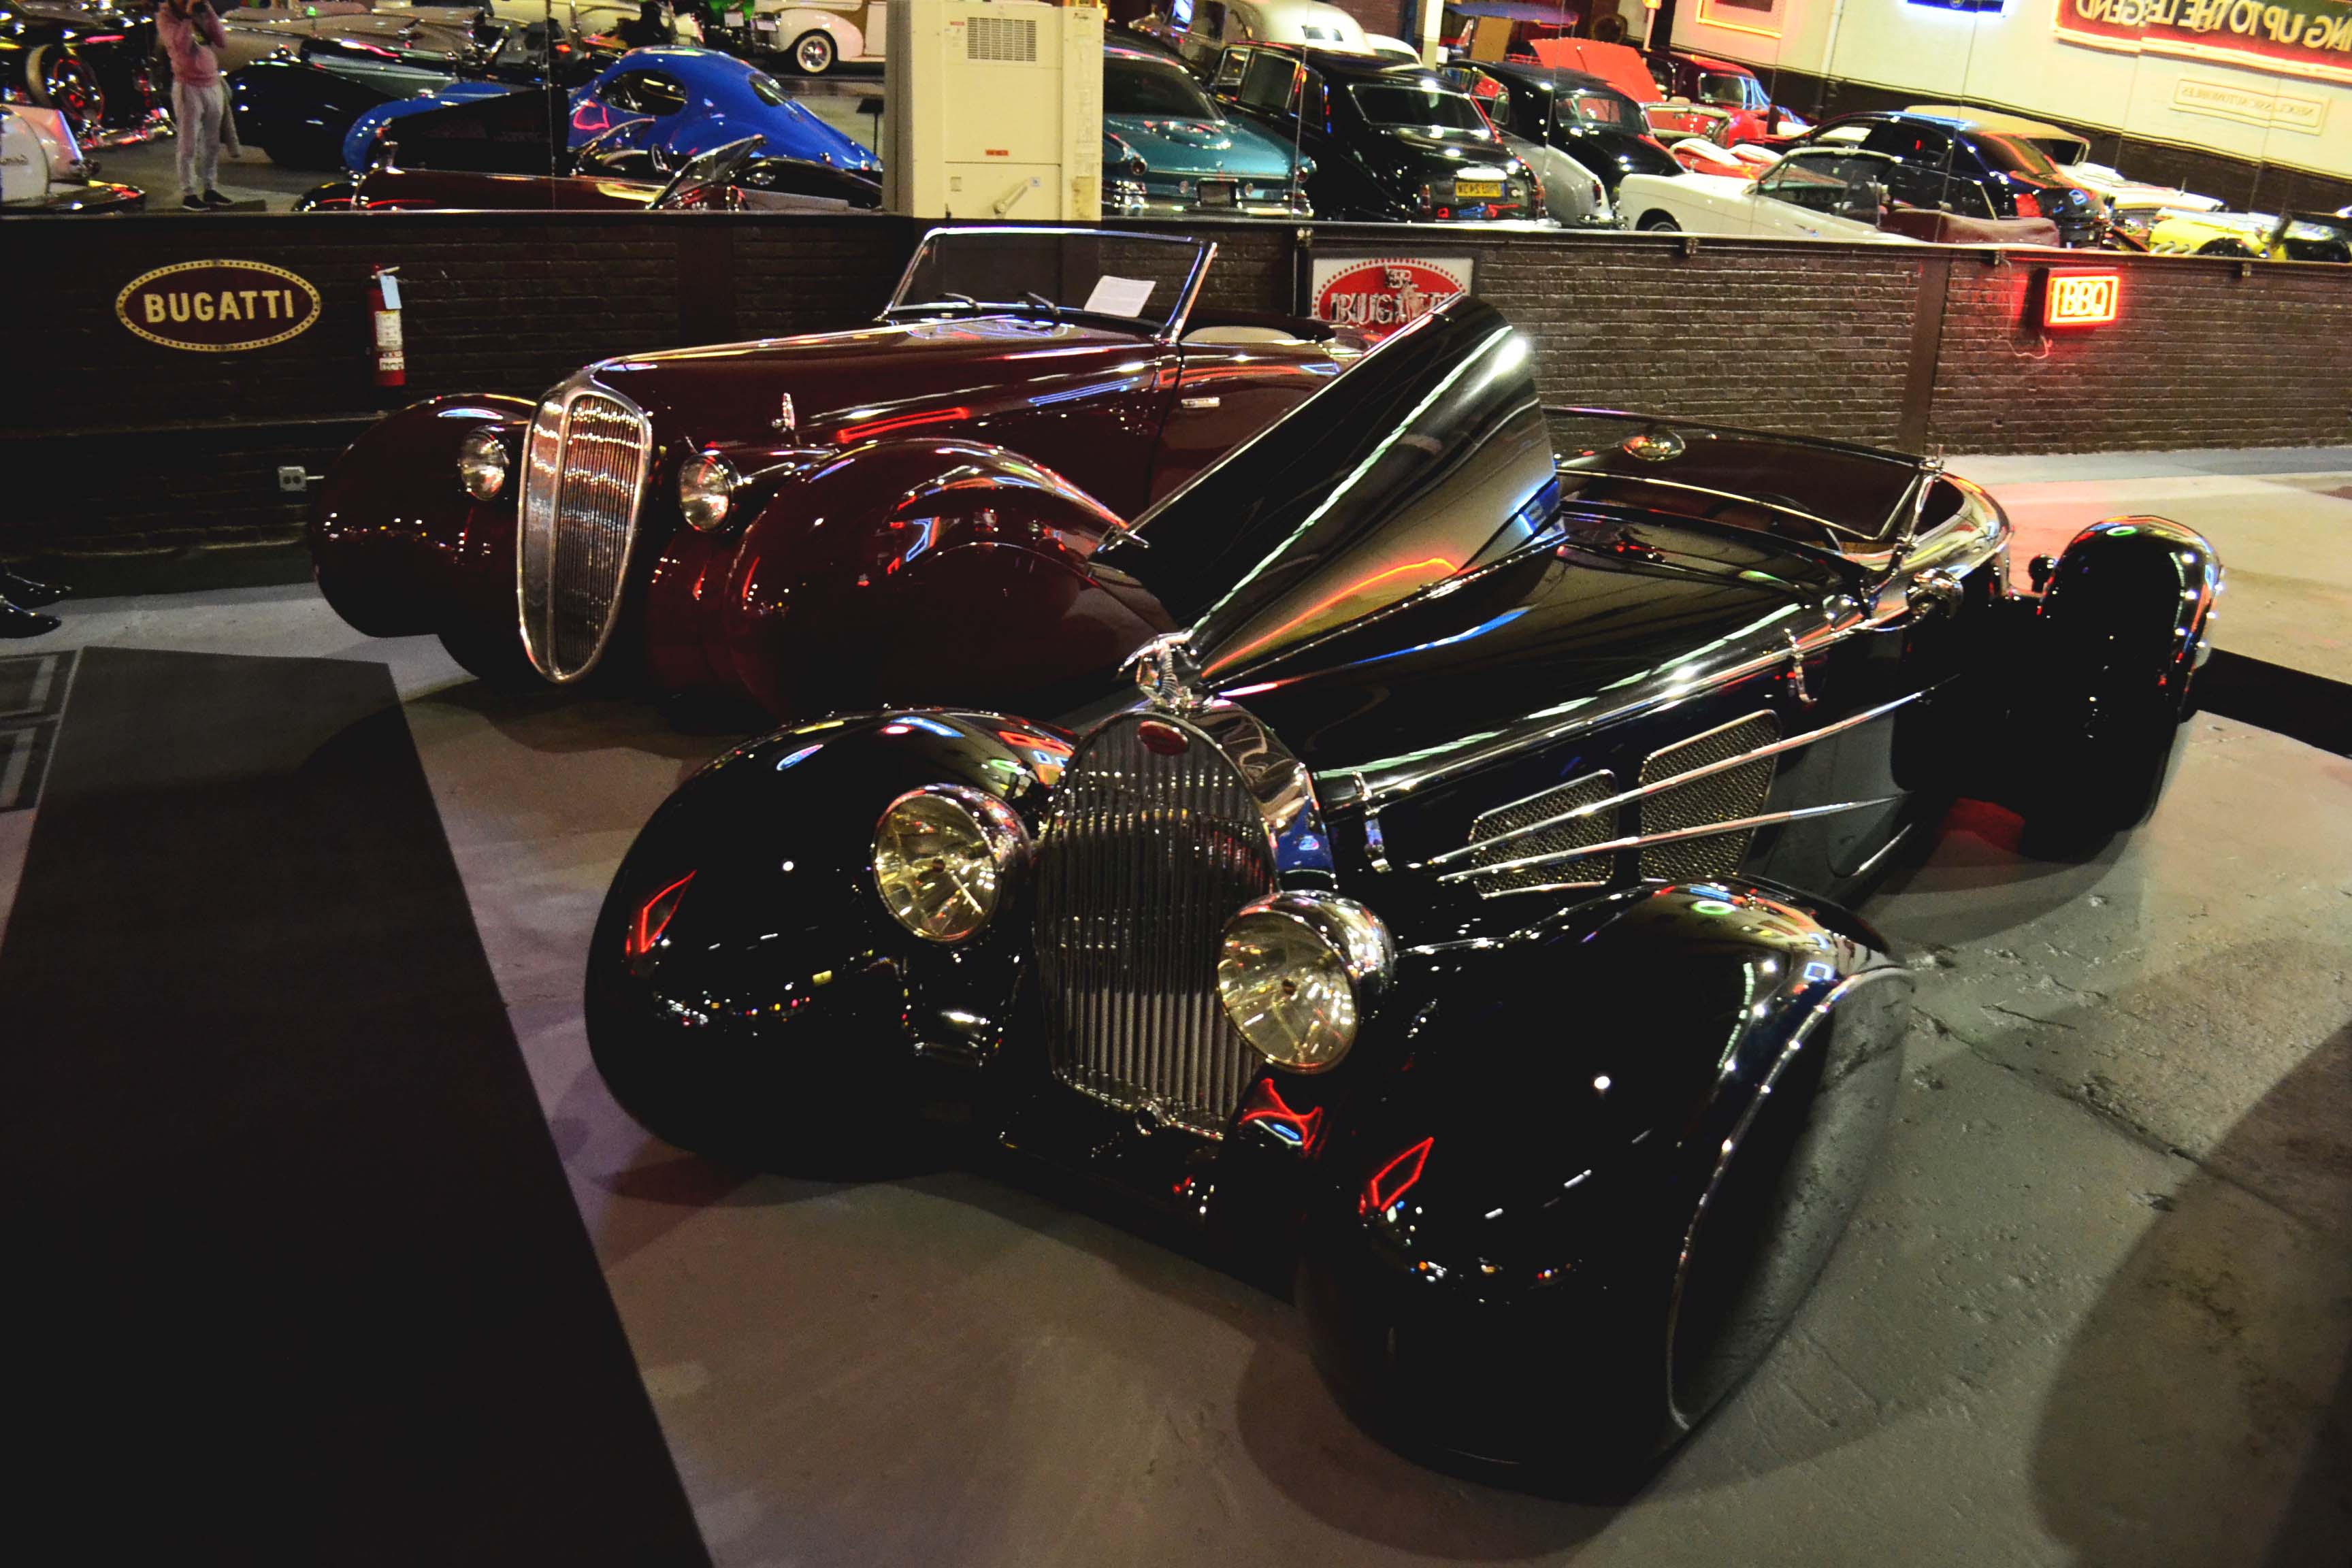 Chicago's Klairmont Kollection Auto Museum